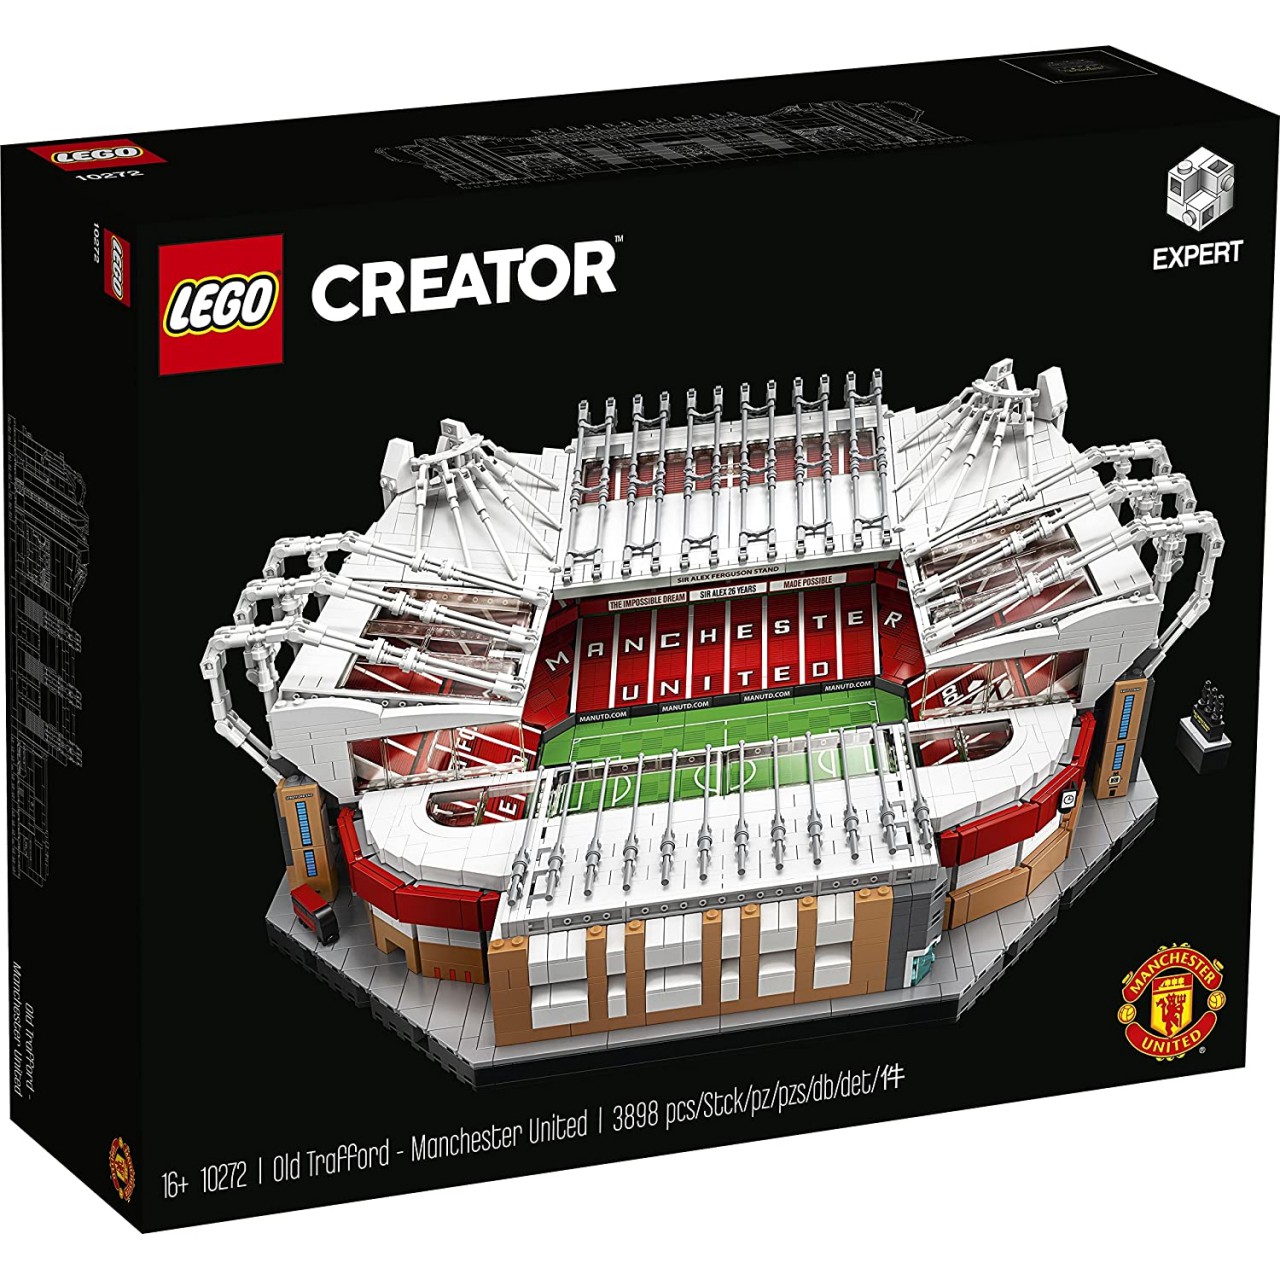 Lego Creator Expert 10272 Old Trafford - Manchester United